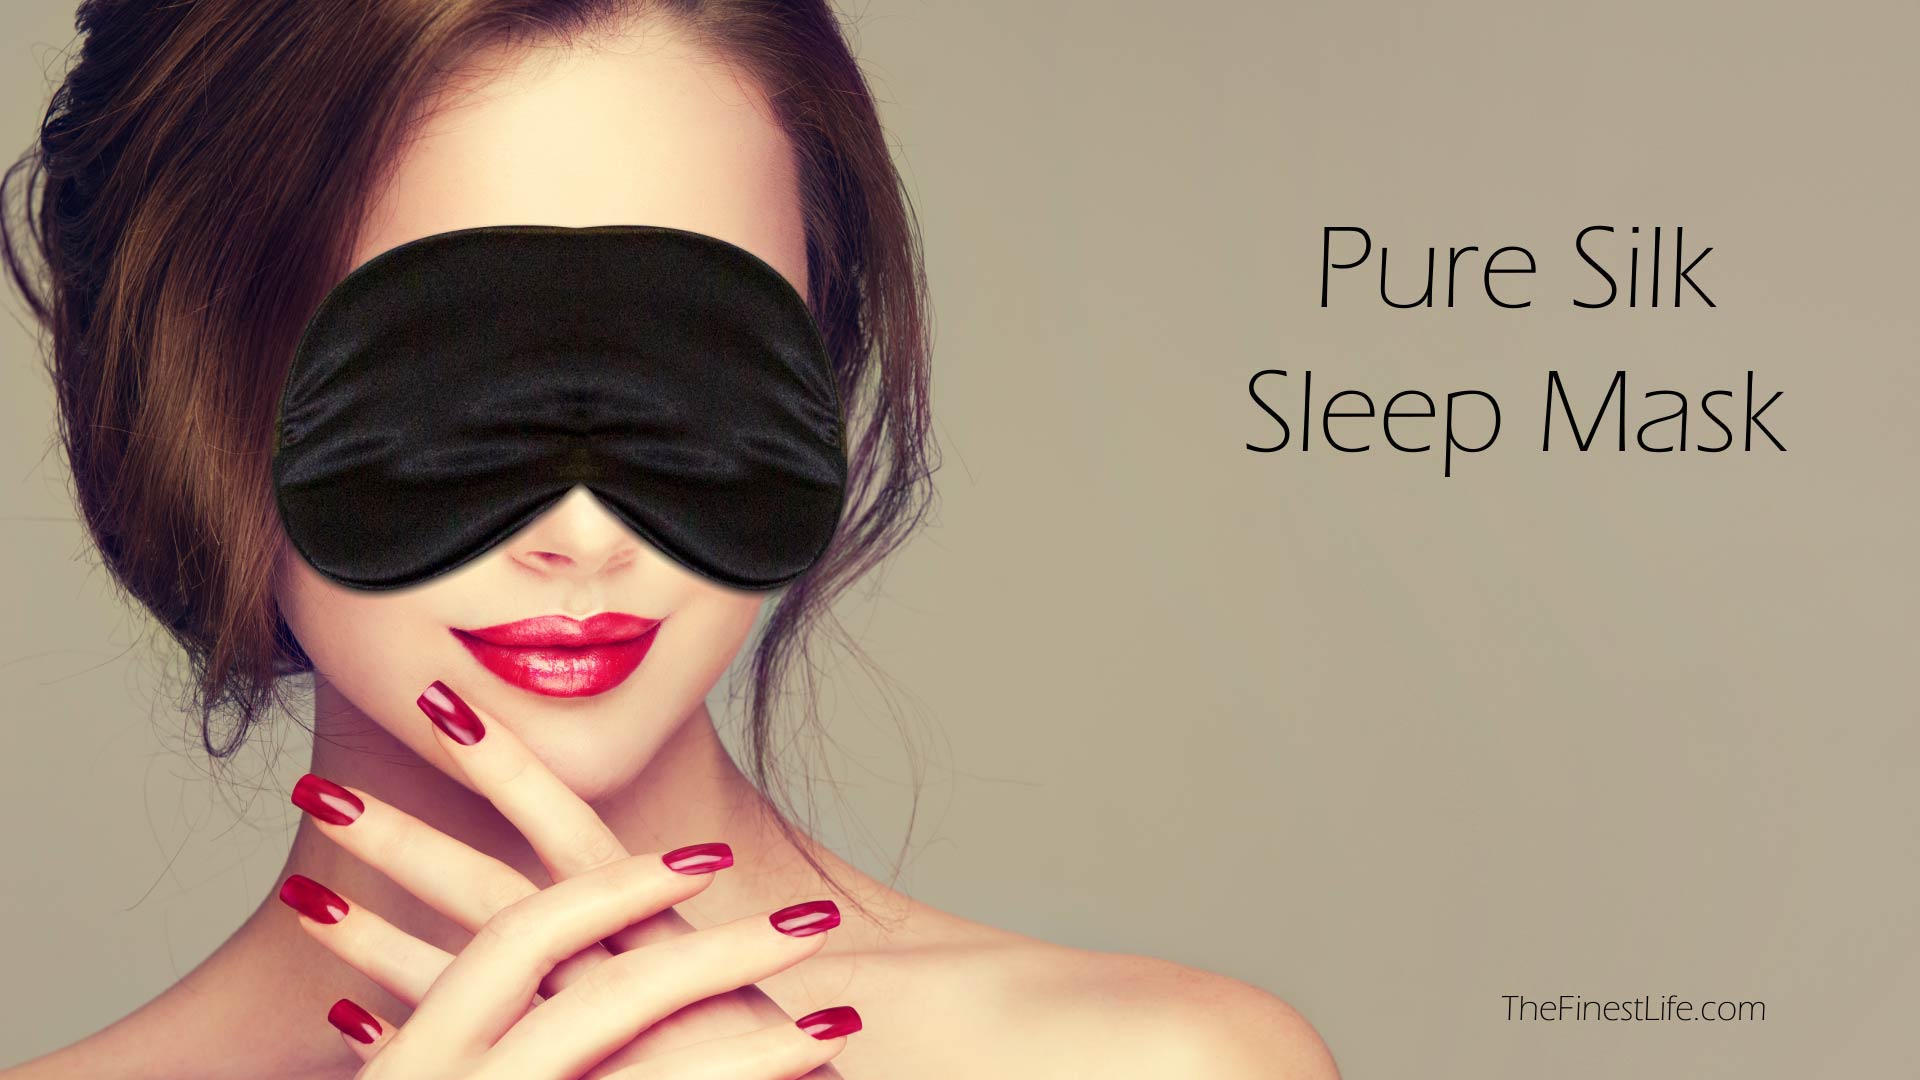 Pure Silk Sleep Mask The Finest Life 